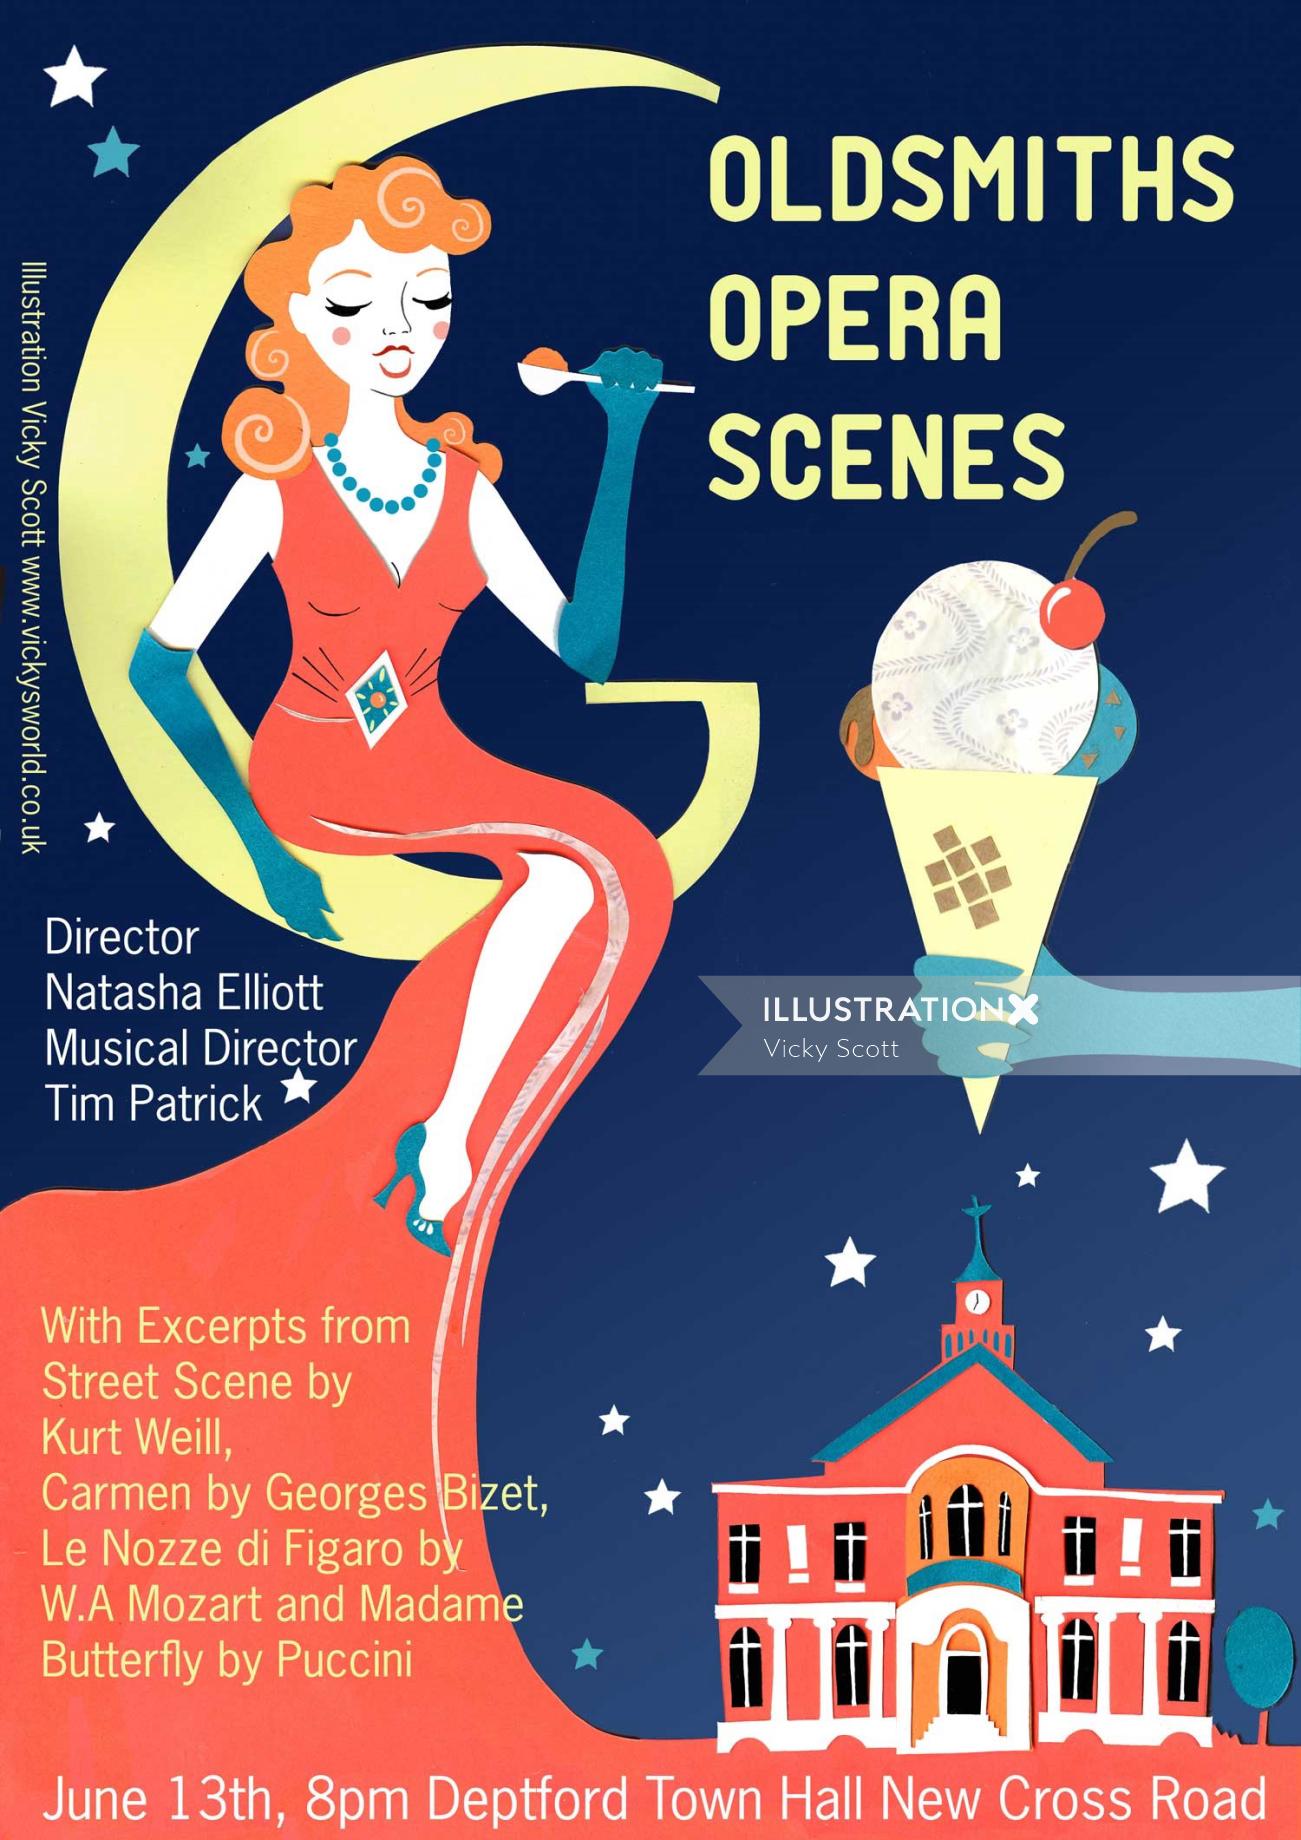 opera, 1940's, ice cream, moon, night, singing, vintage